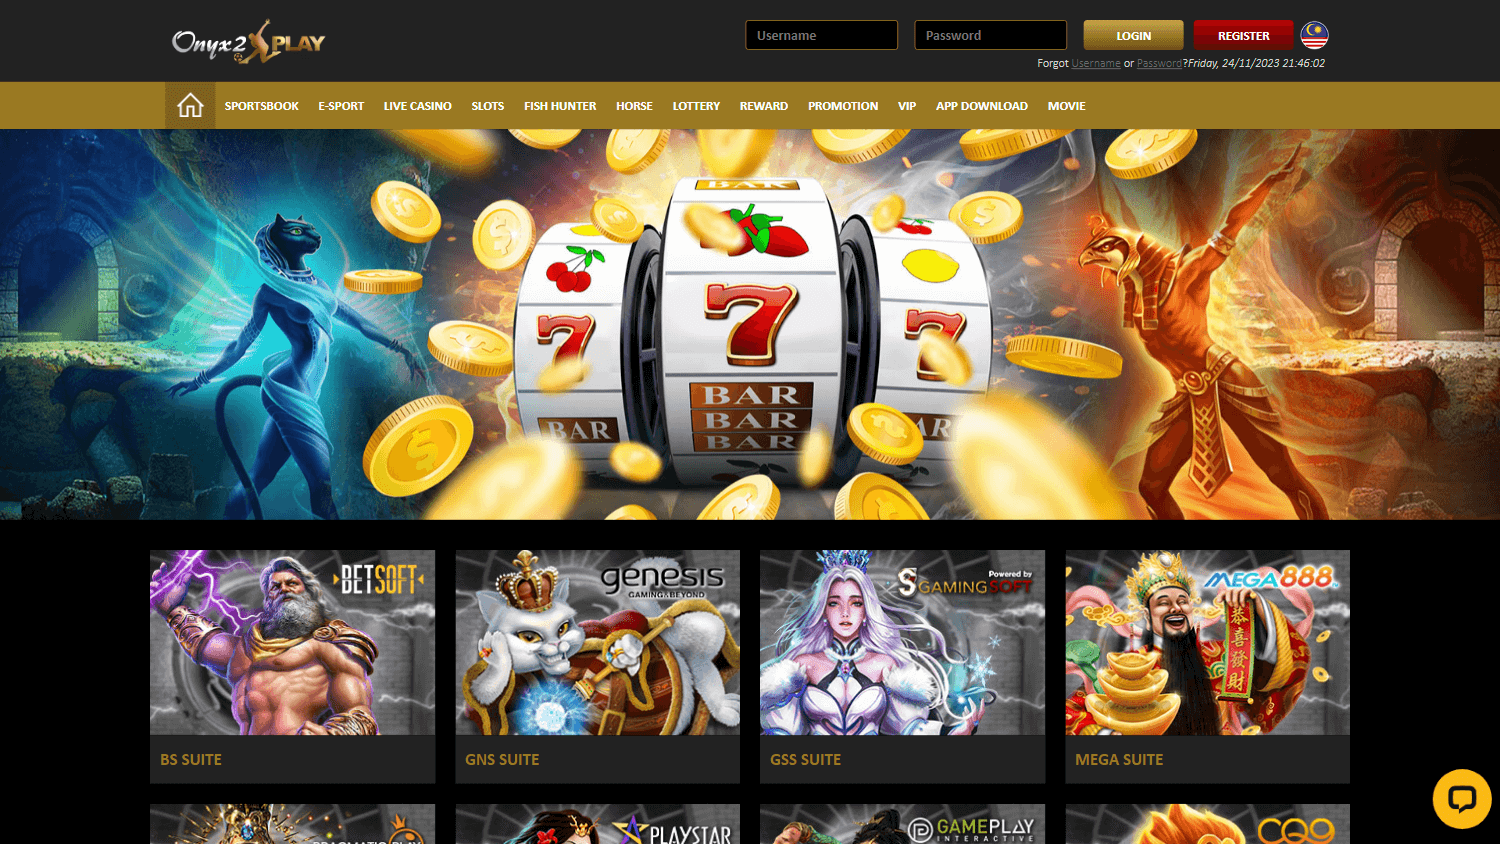 onyx2play_casino_game_gallery_desktop